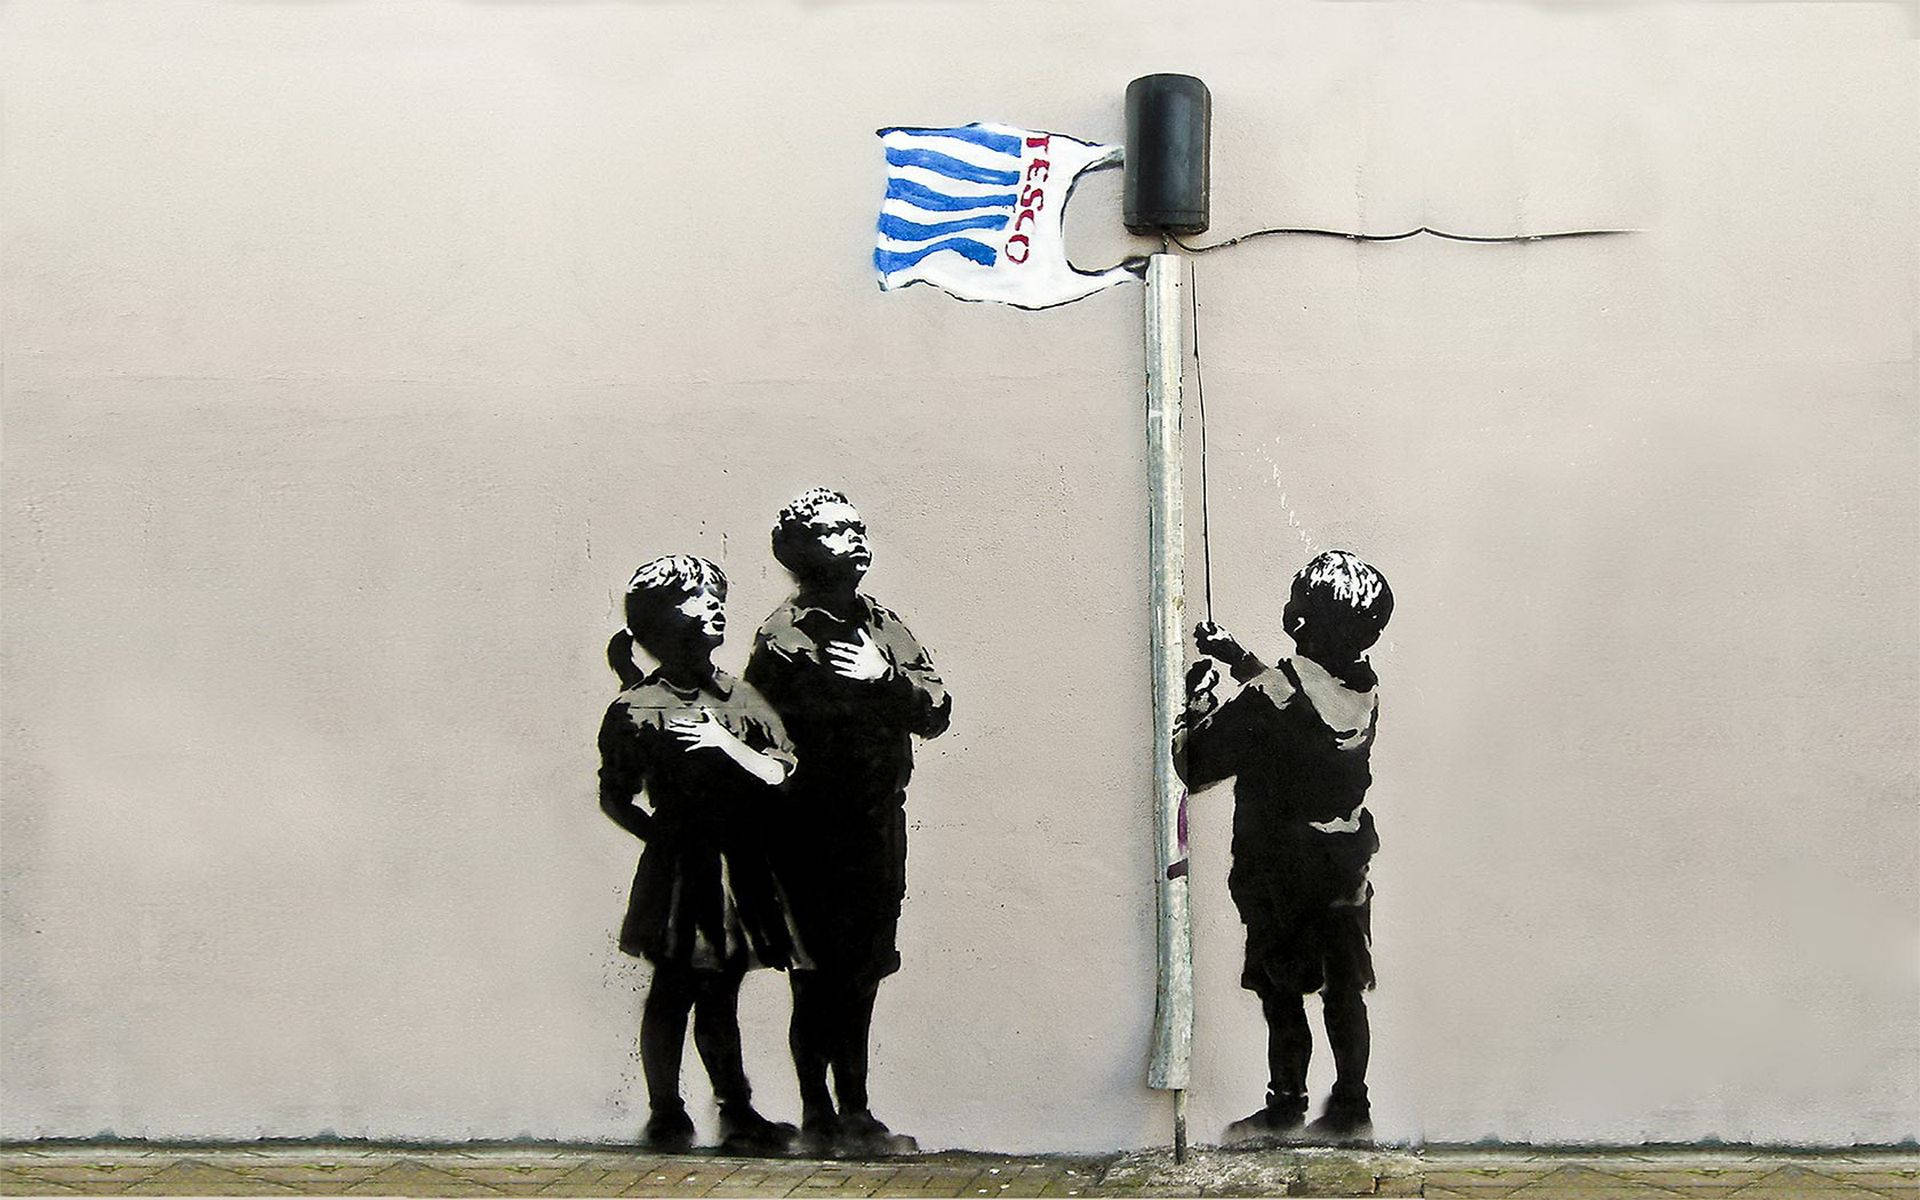 Free Banksy Wallpaper Downloads, [100+] Banksy Wallpapers for FREE |  